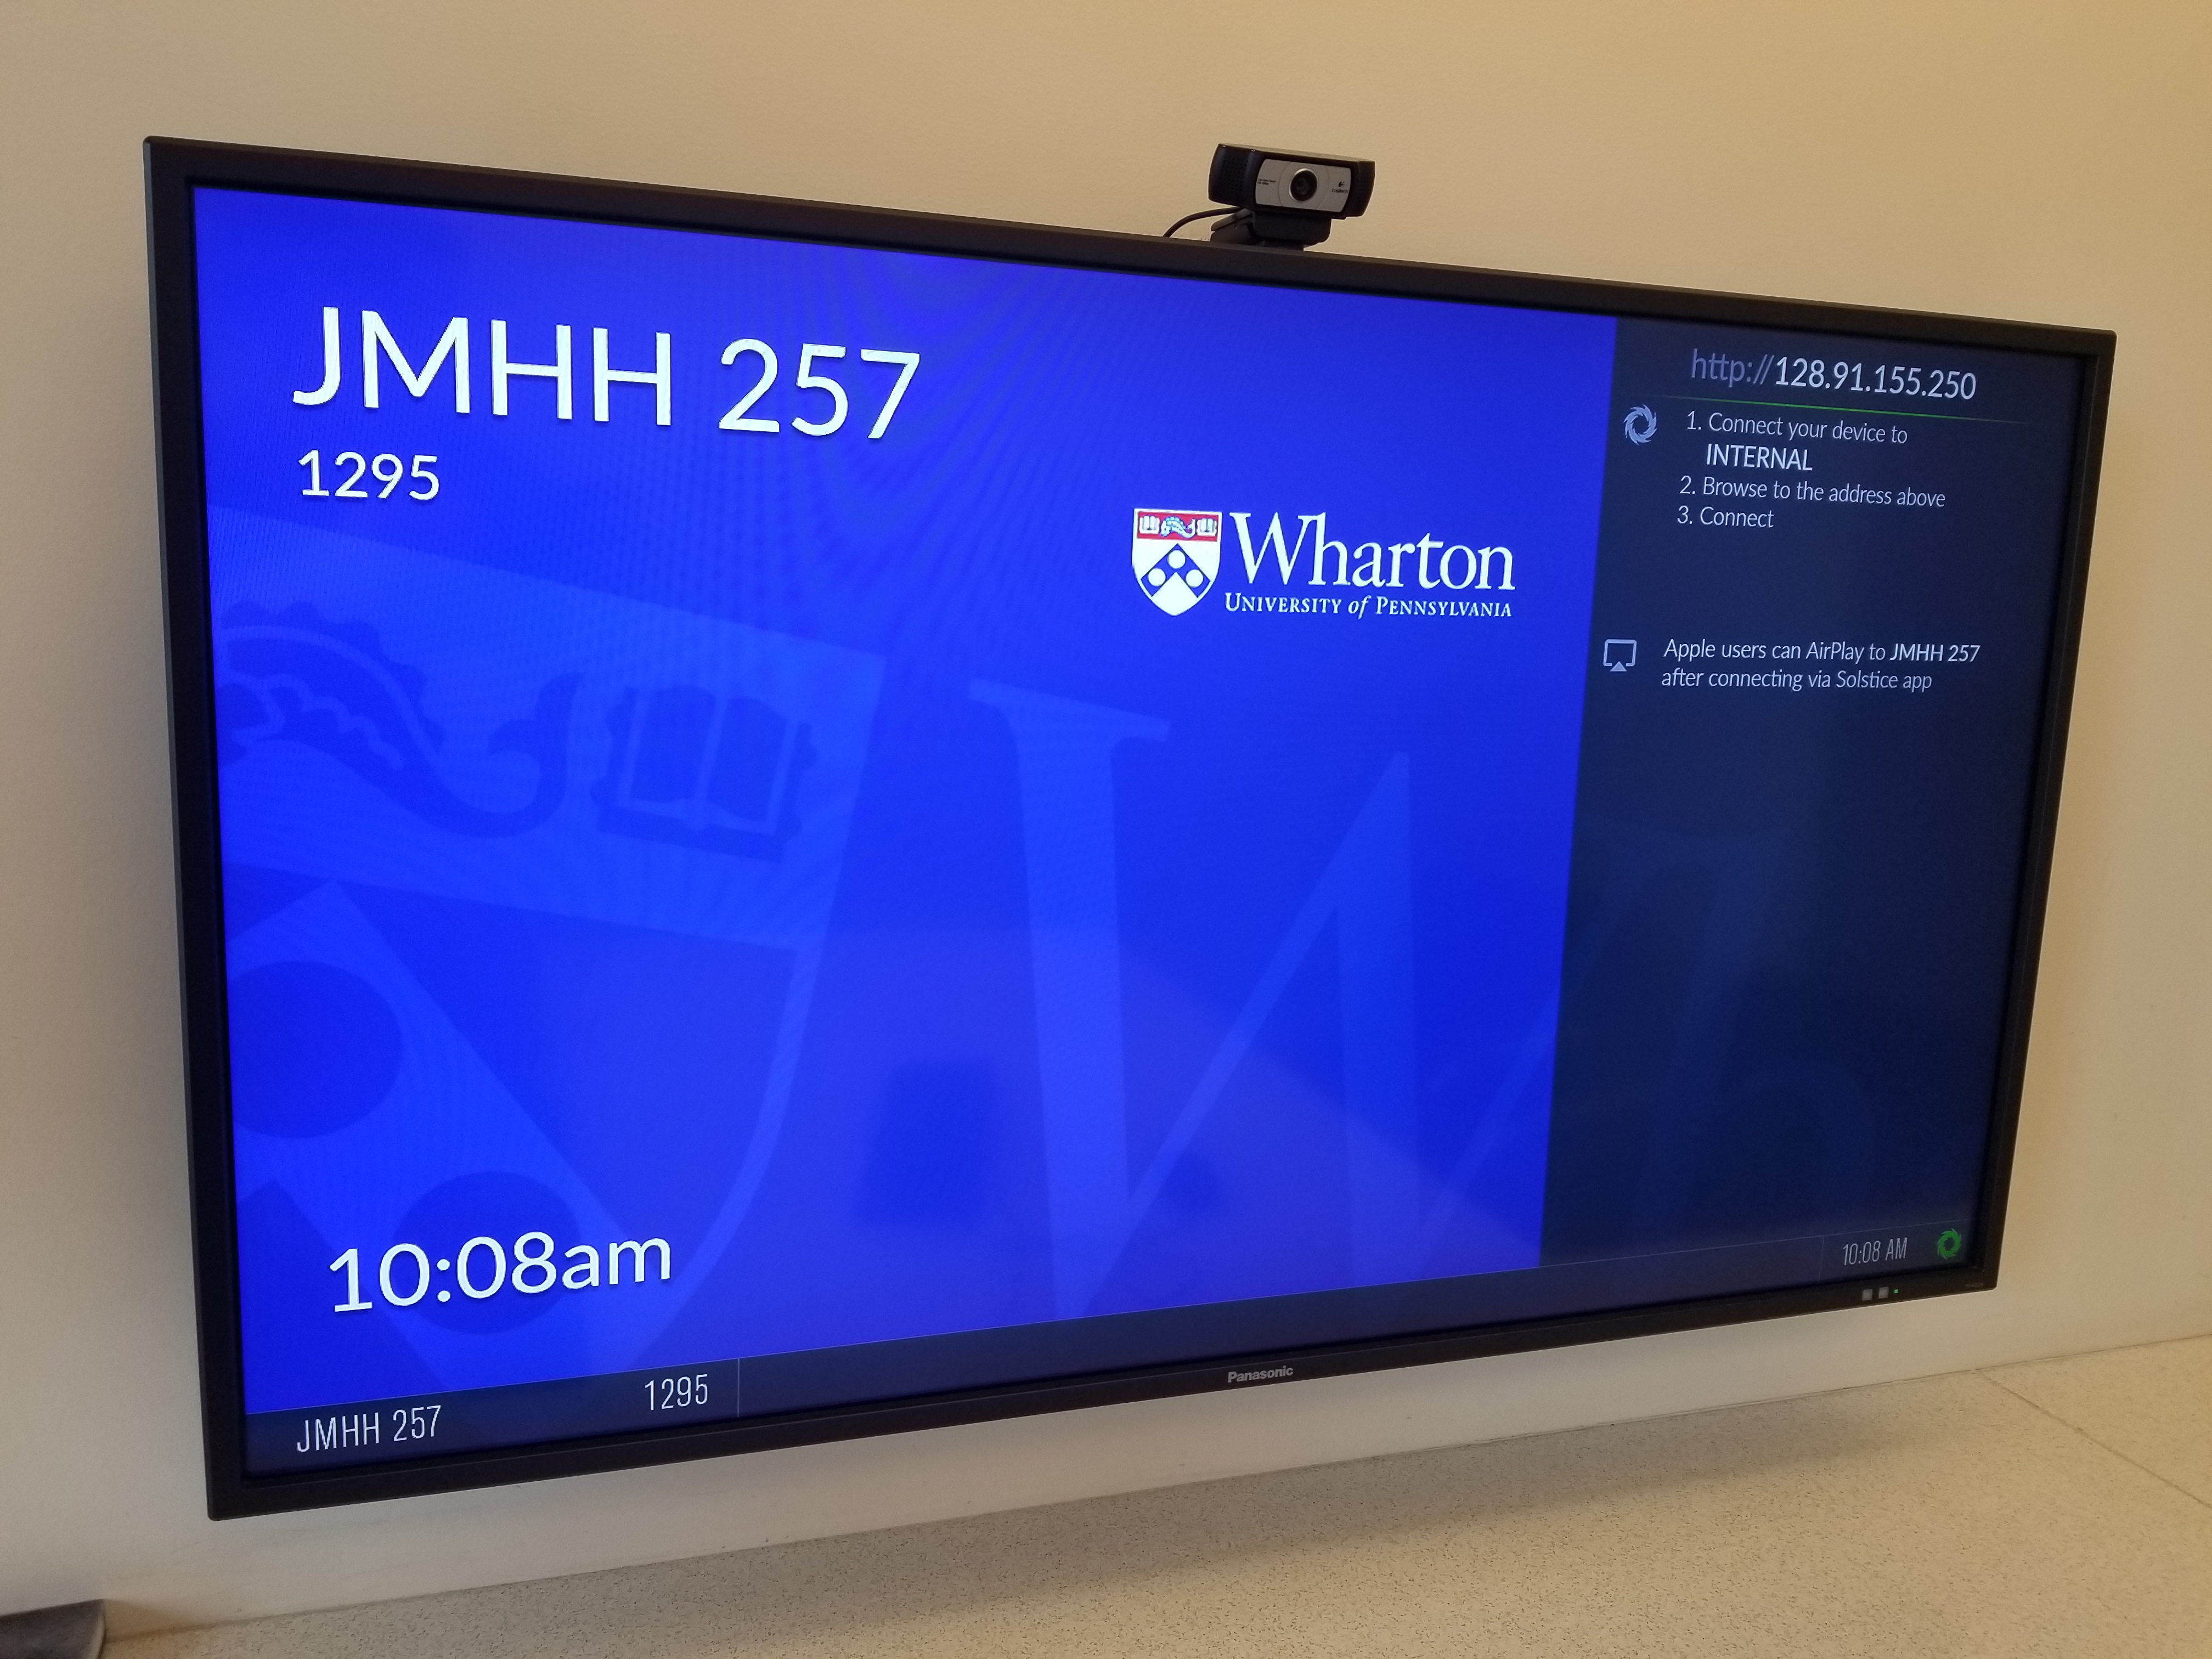 JMHH 257 (Room code 1295) on display screen.